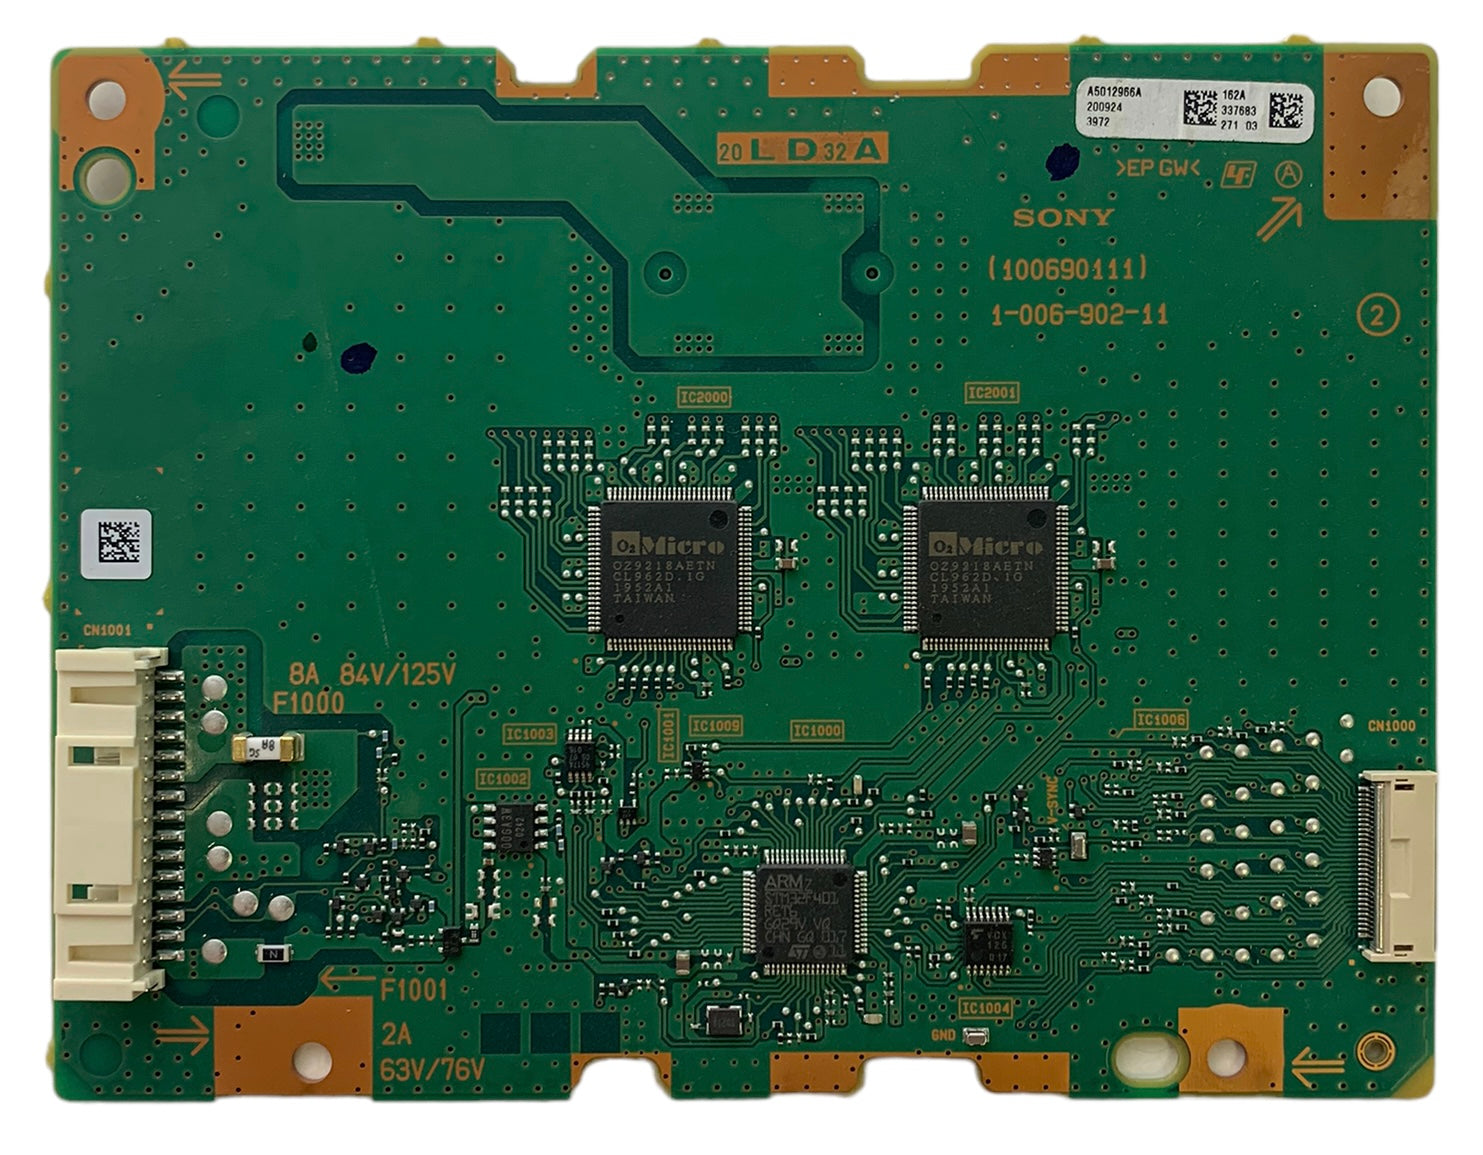 Sony A-5012-966-A 20LD32A LED Driver Board